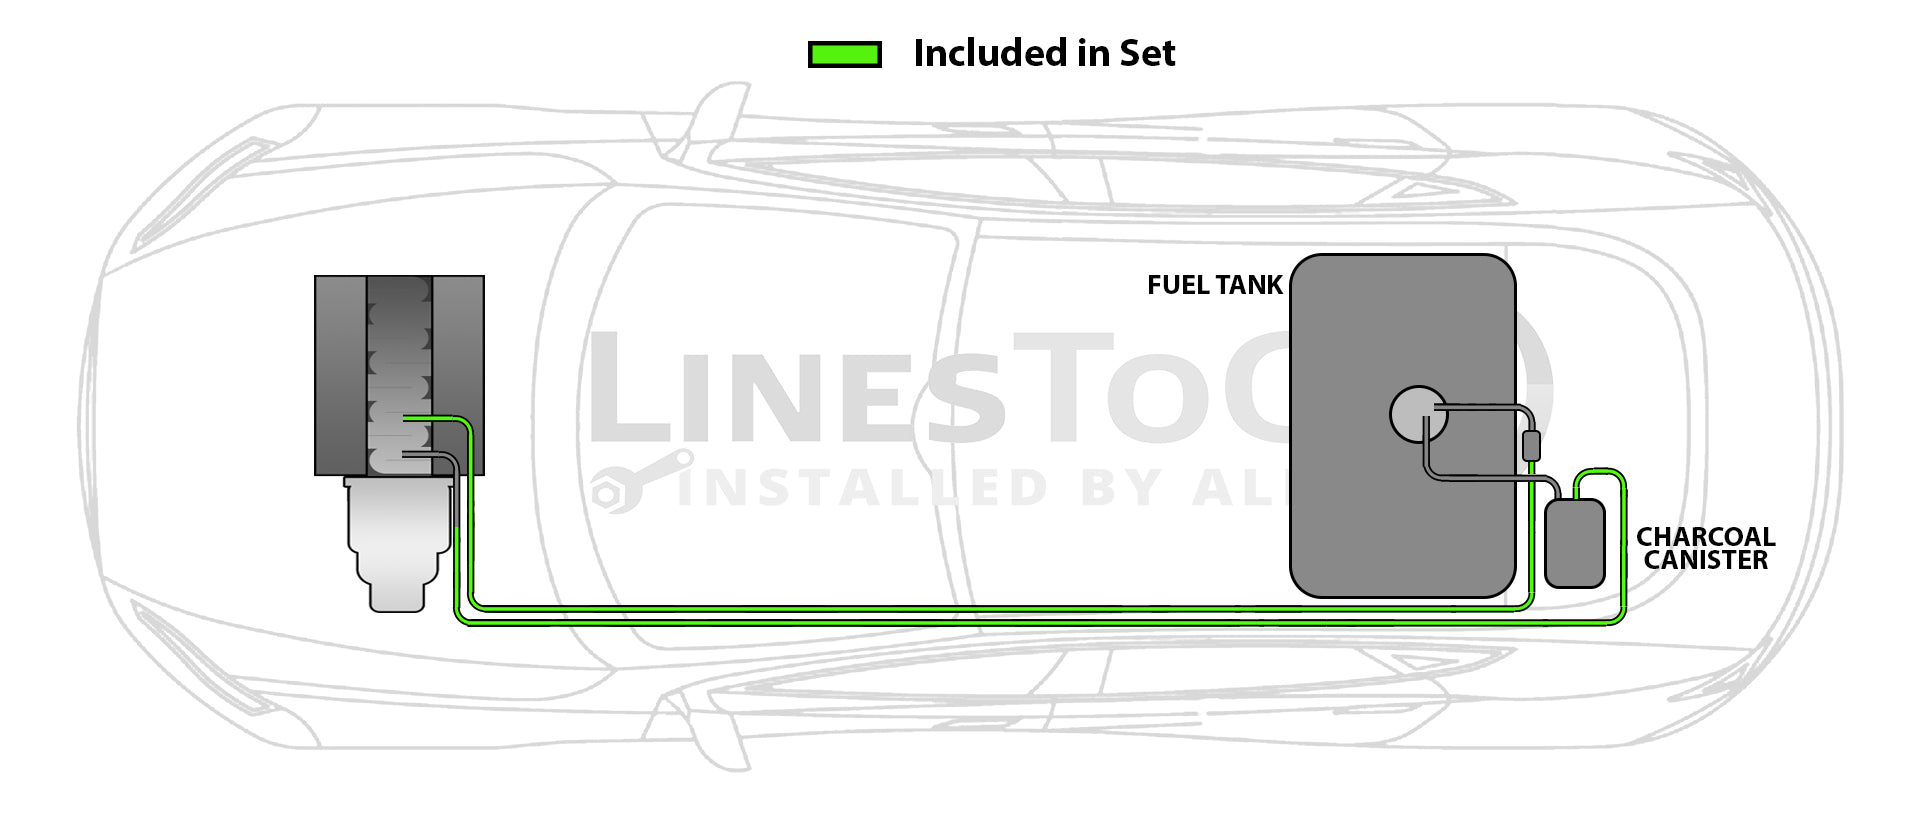 Pontiac G5 Fuel Line Set 2010 2.4L FL255-A3L